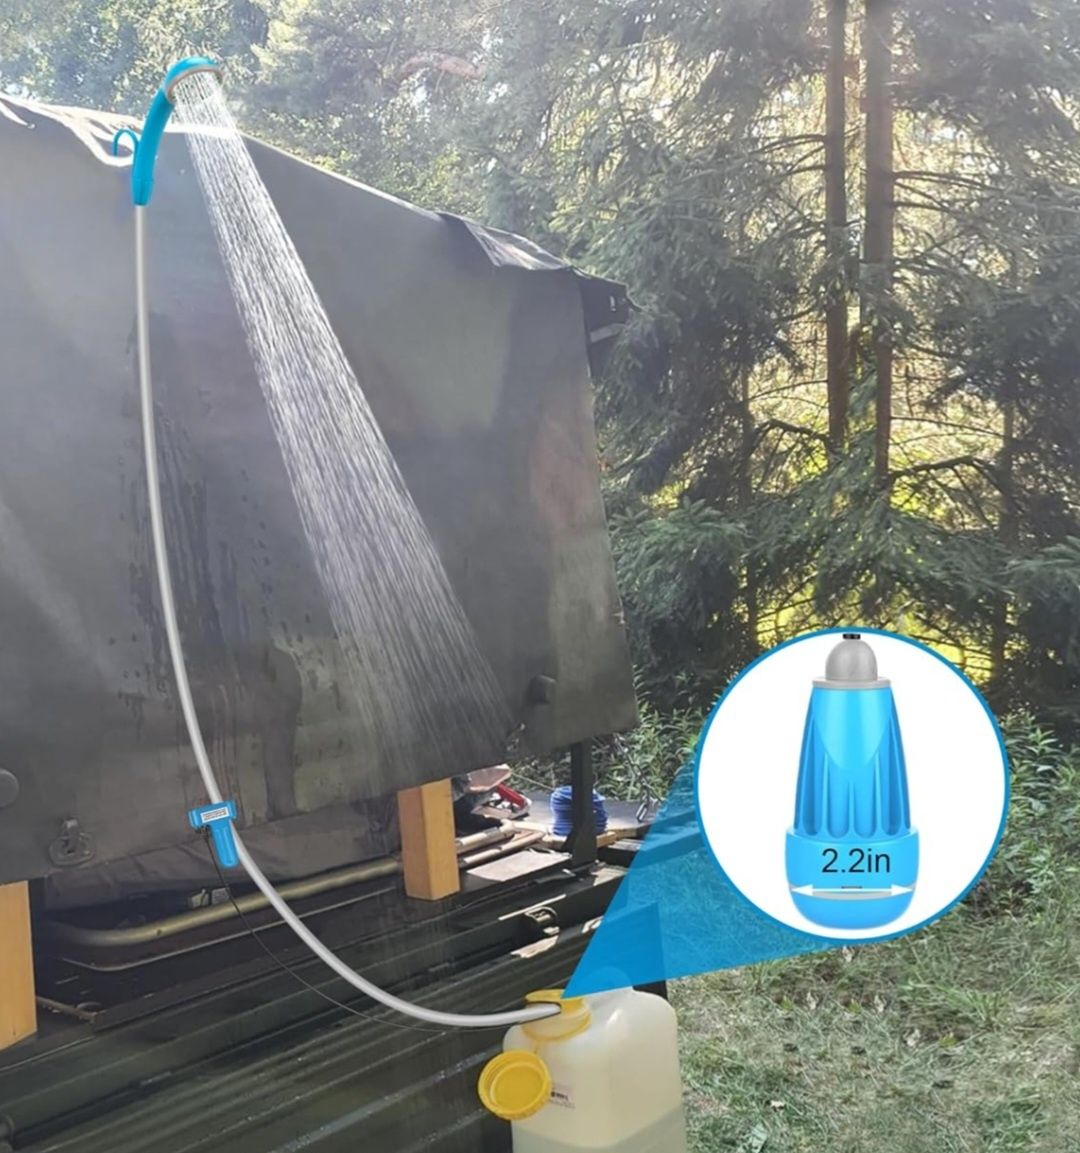 Prysznic turystyczny liberrway camping shower